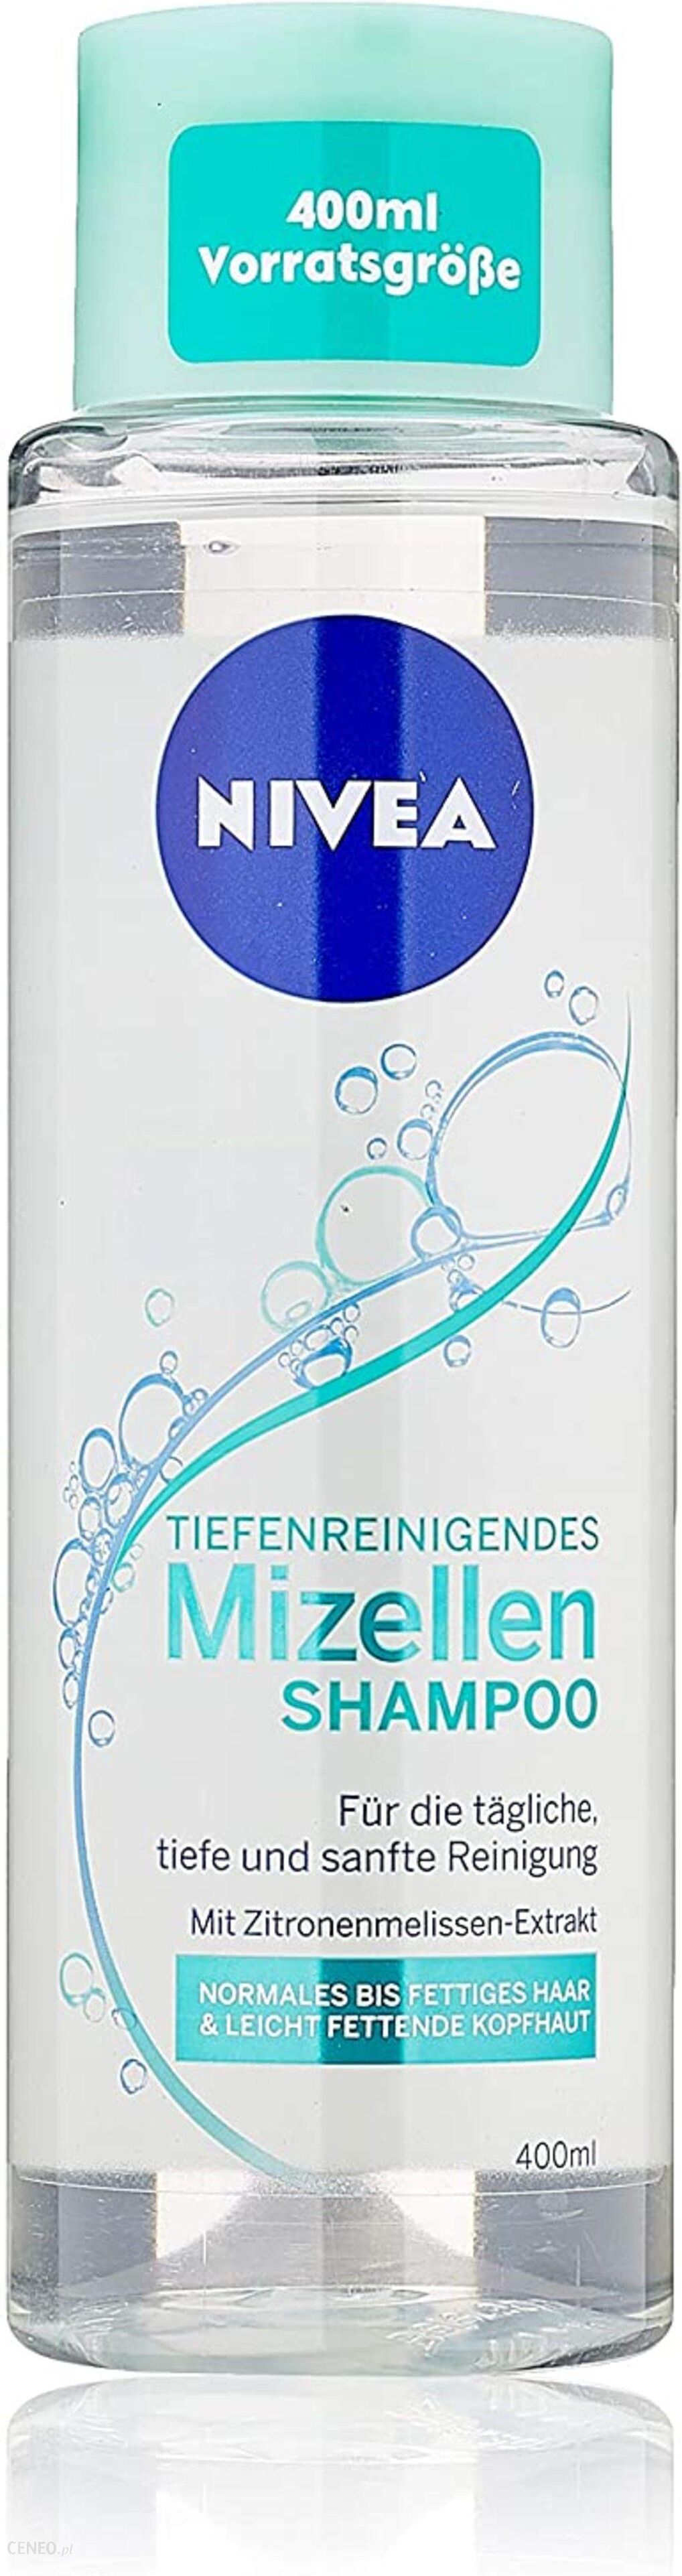 nivea szampon miceralny a lonotokowe zaplenie skory